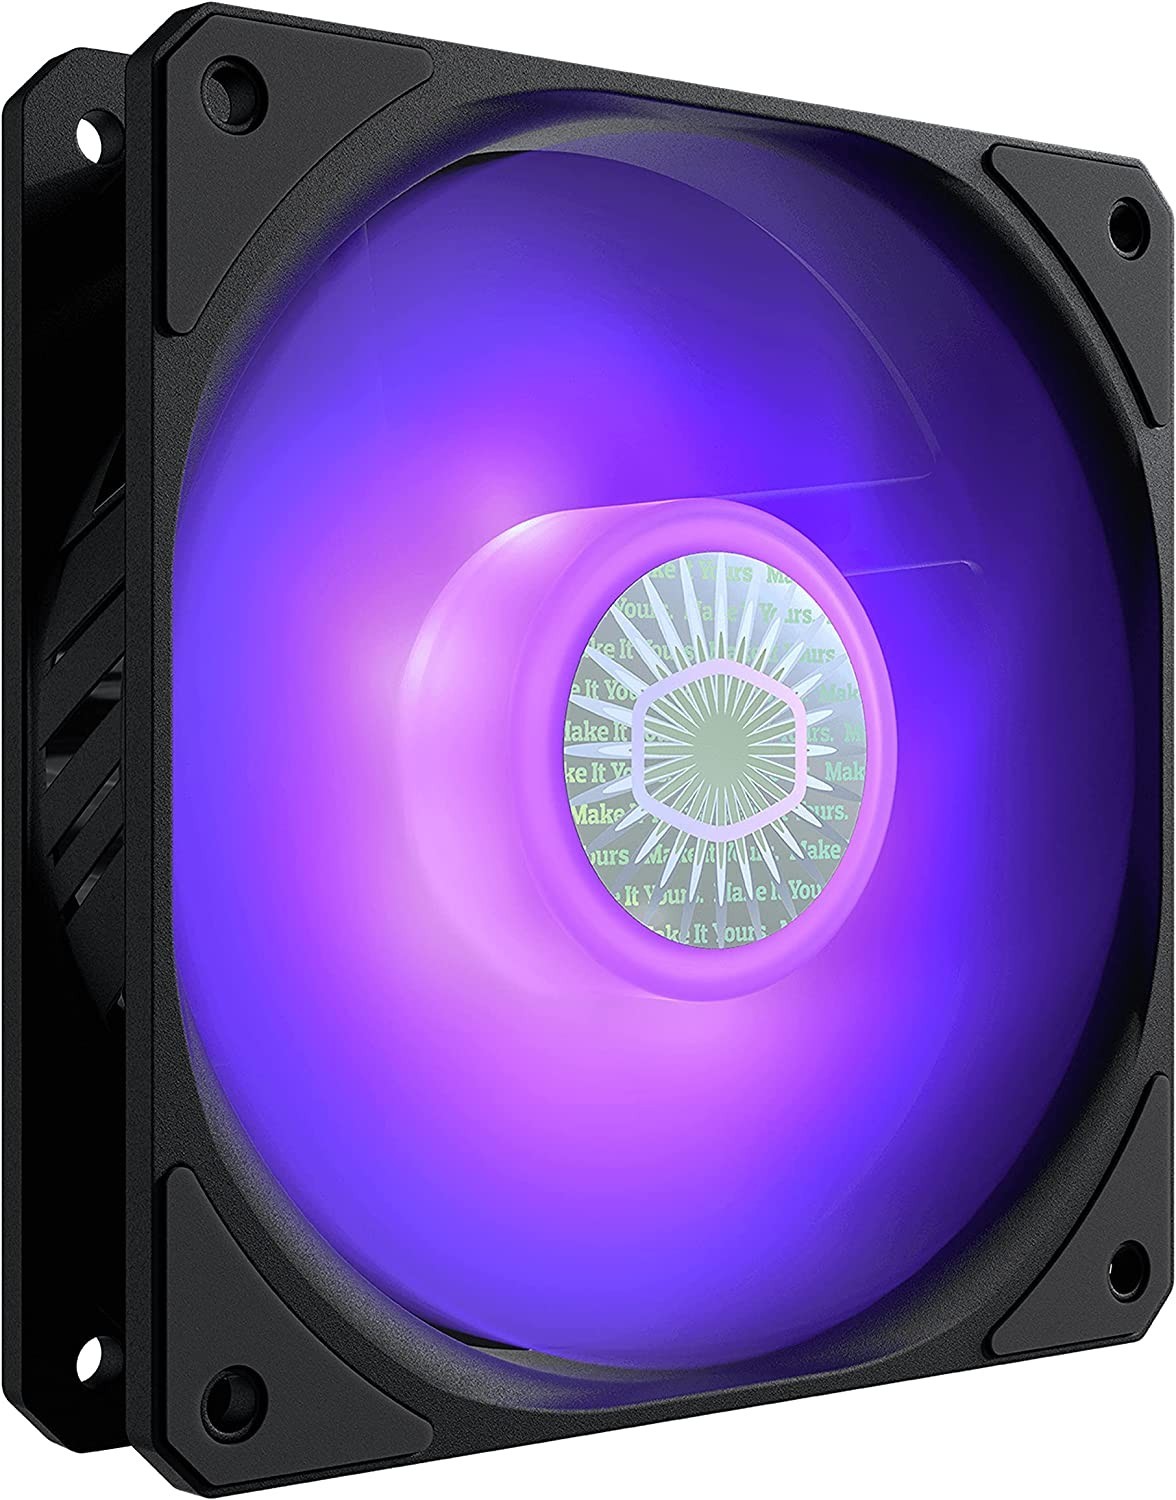 Ventilateur Cooler Master SickleFlow 120 RGB - Tunisie